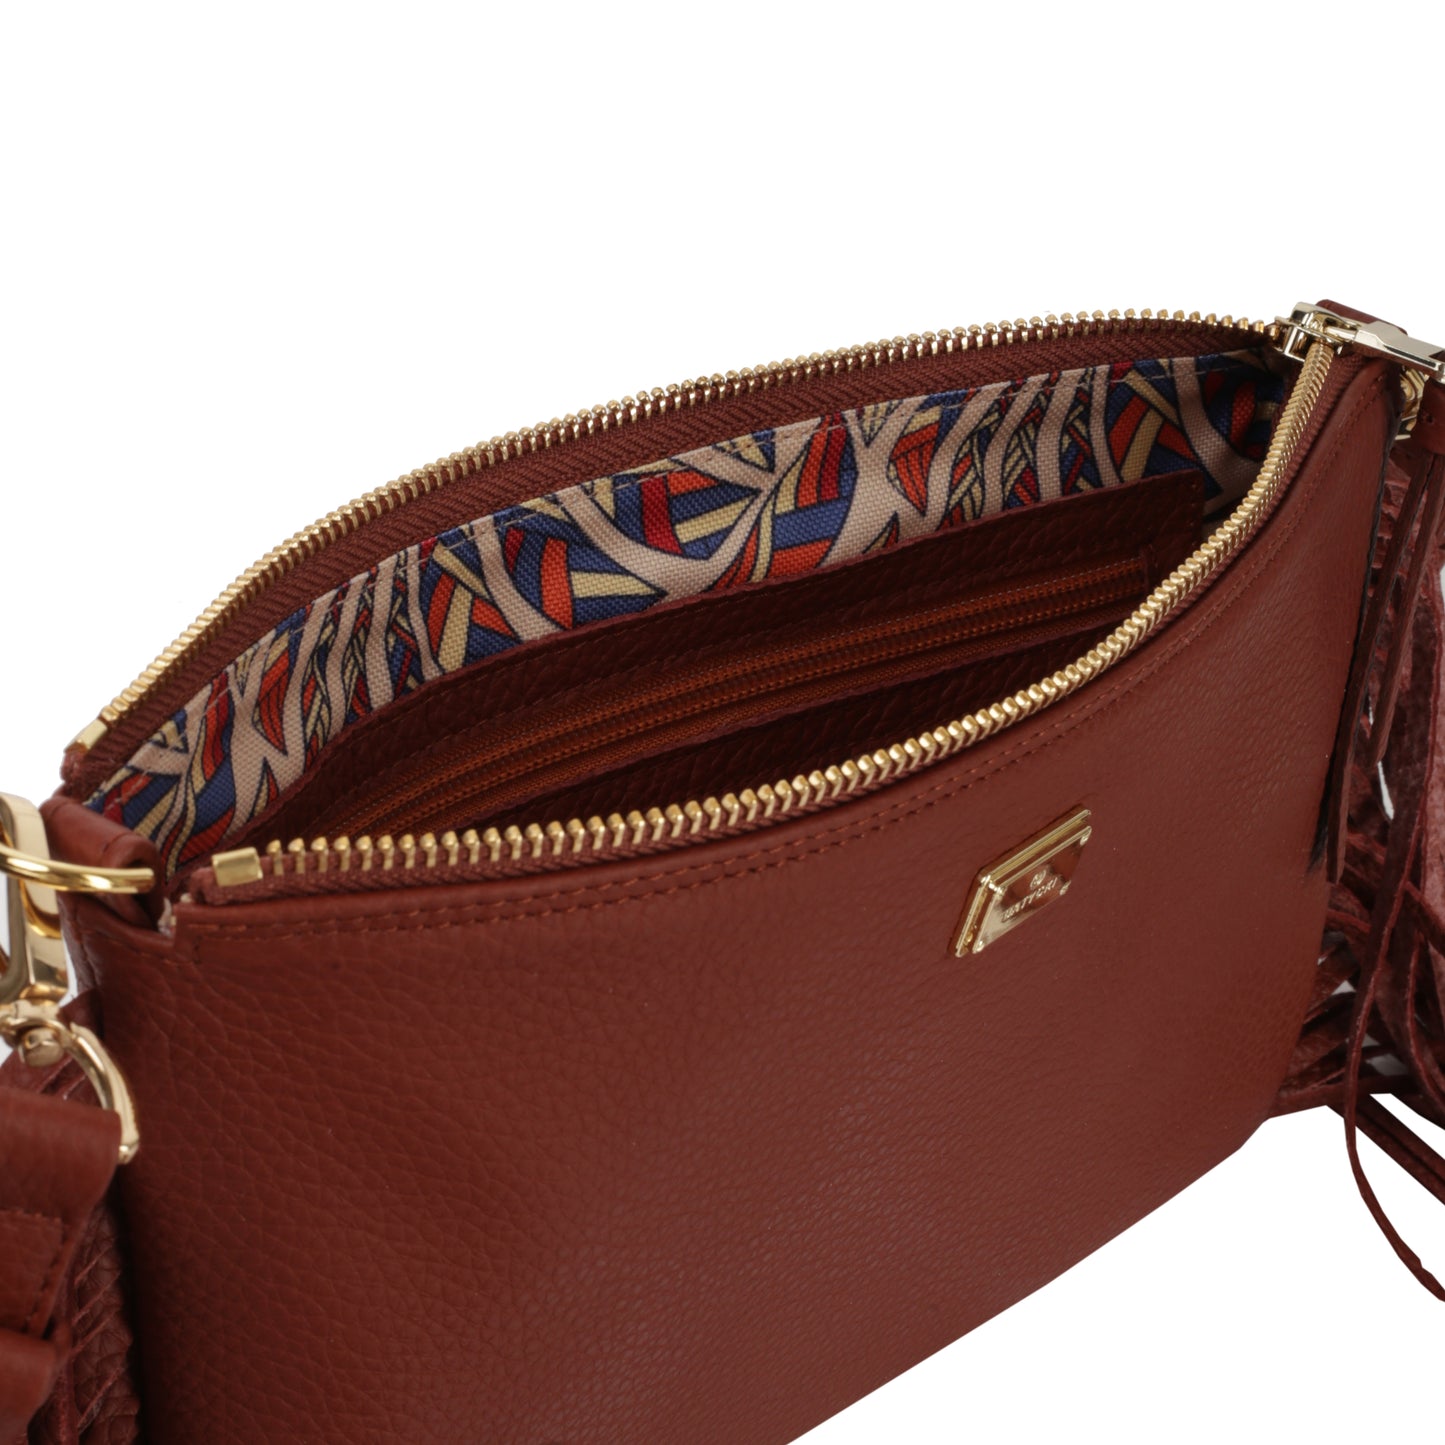 POSSY FLOTER BRANDY women's leather handbag